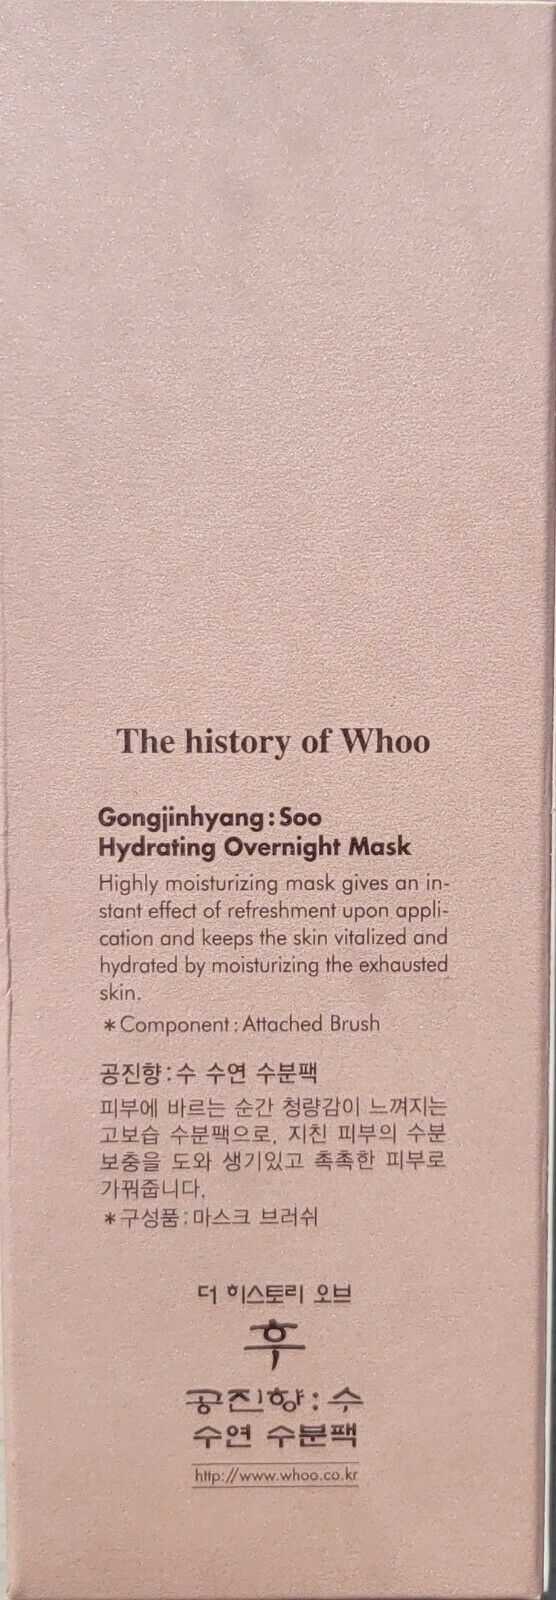 The History of Whoo Vital Увлажняющая ночная маска 100 мл + корректор пятен 30 шт. 